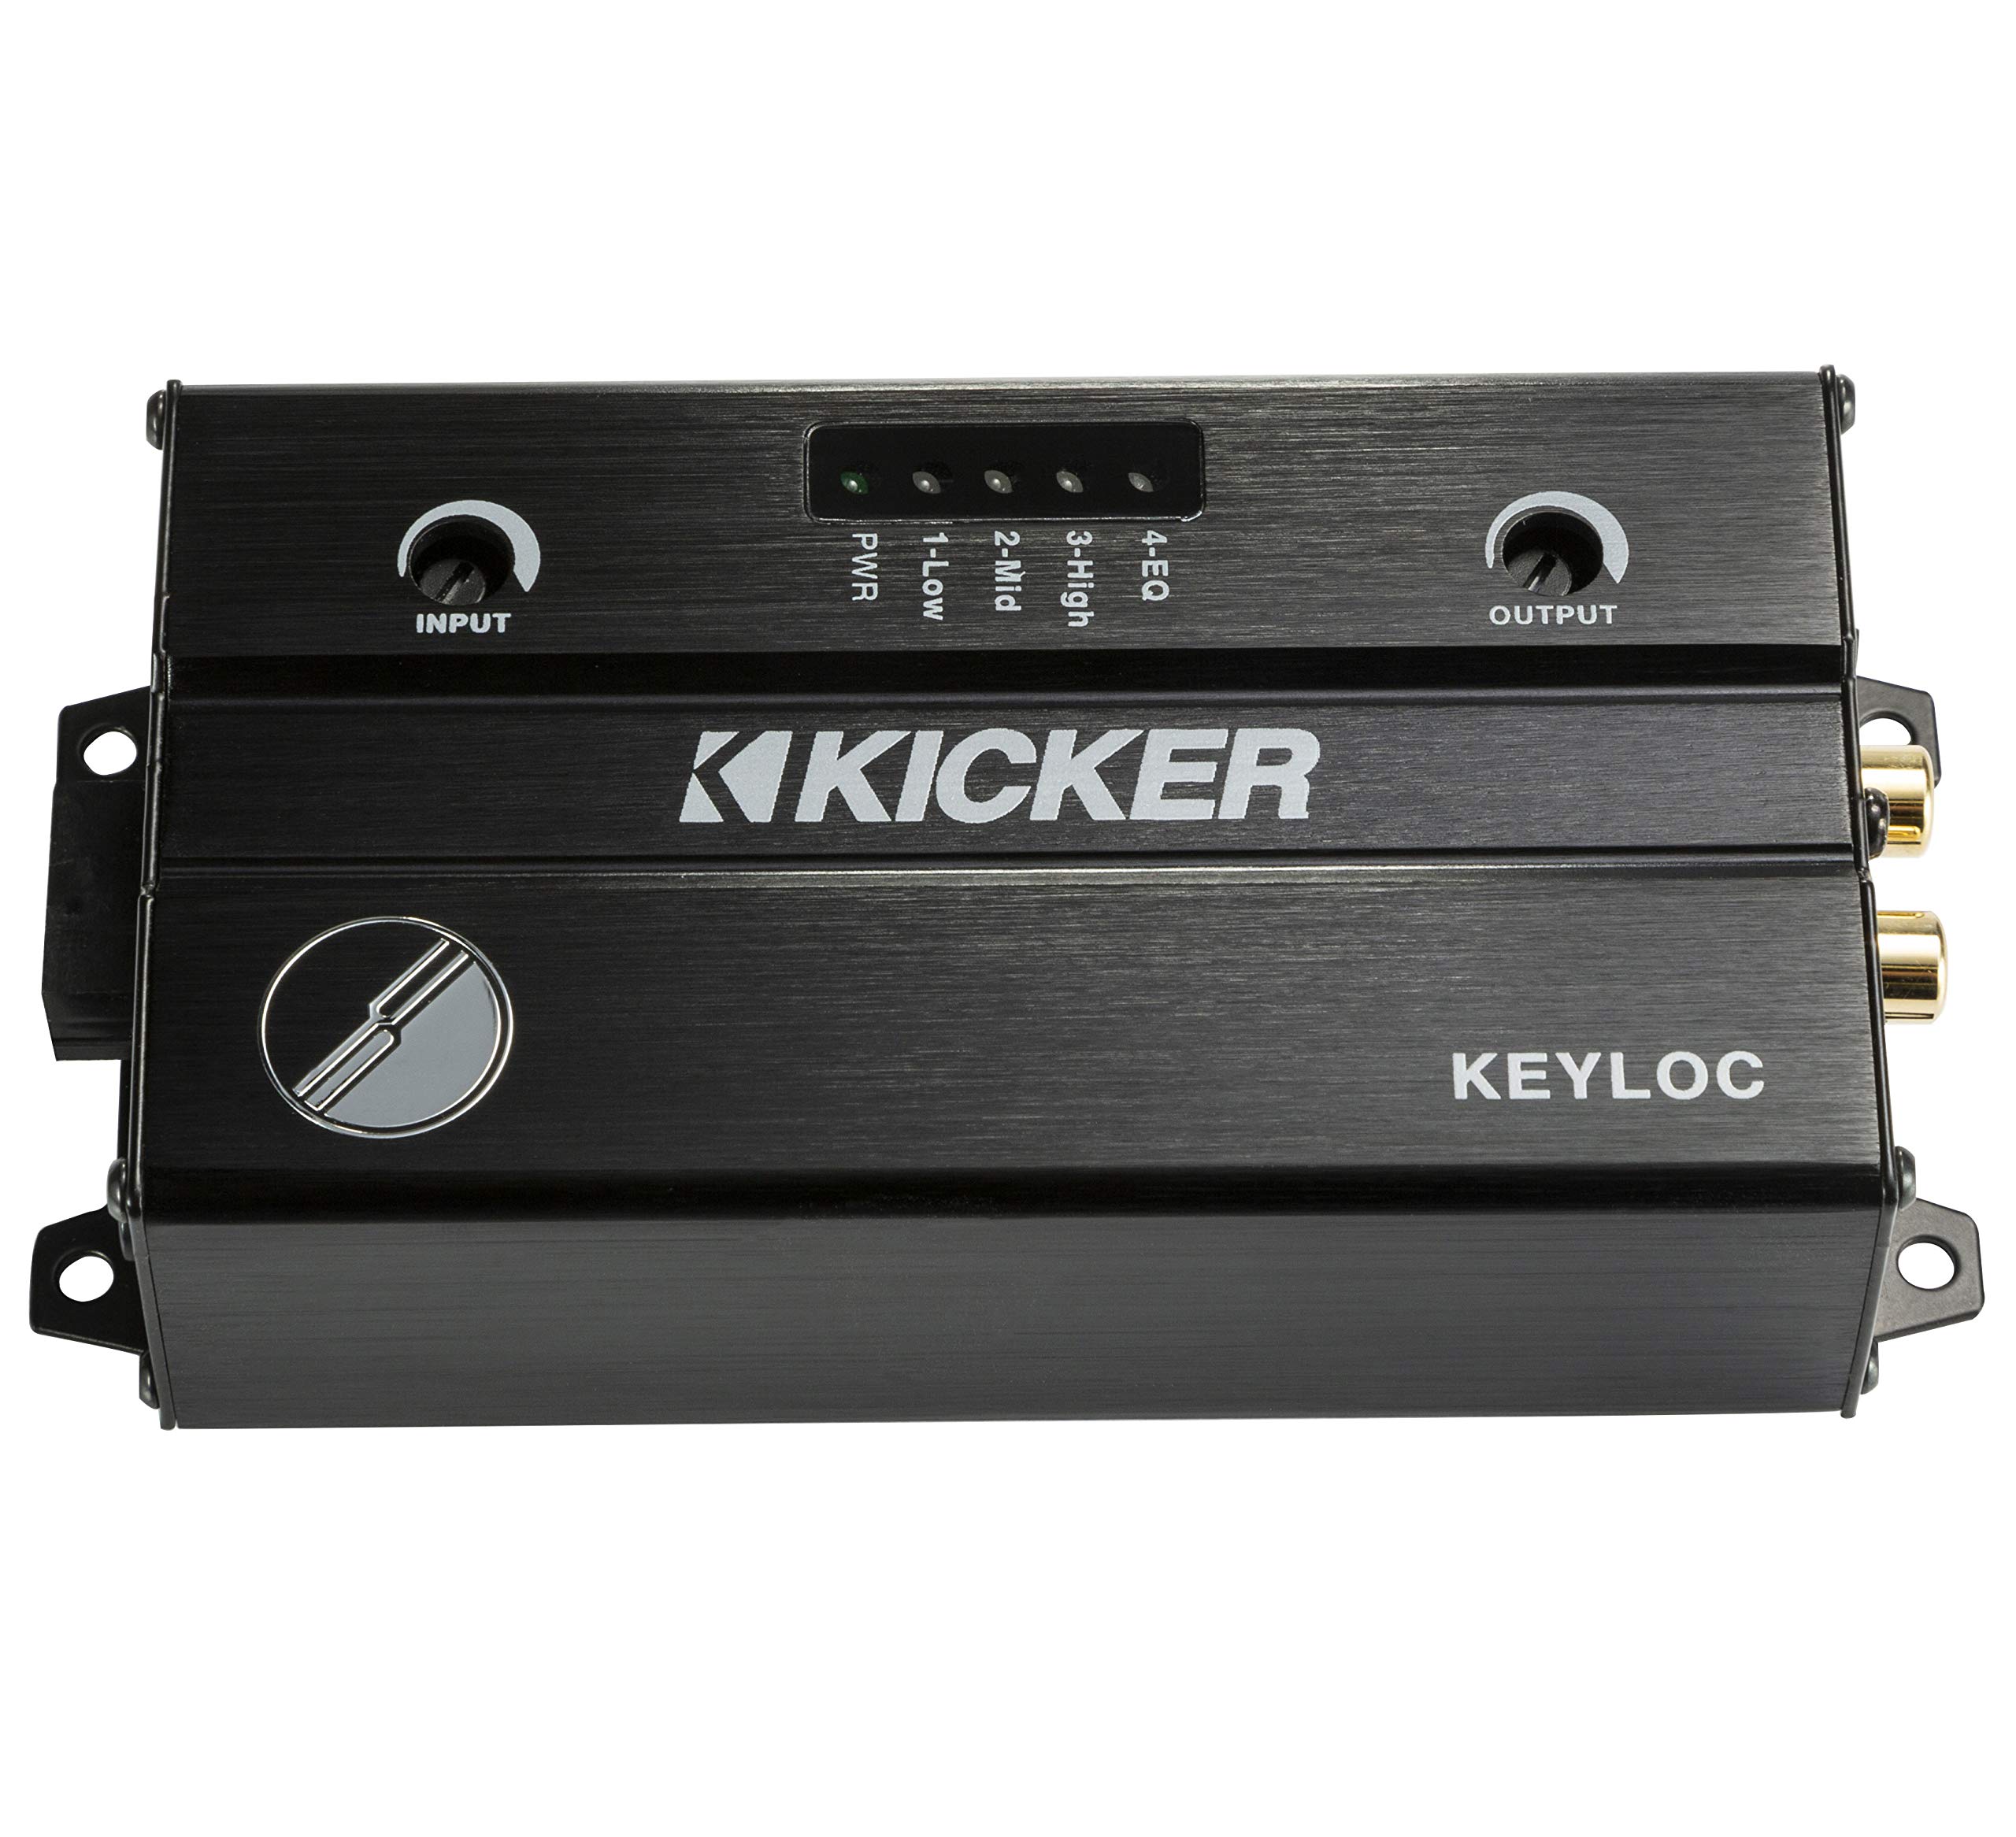 Kicker 47KEYLOC Smart 2 Channcel Line Output Converter سهل إعداد راديو المصنع